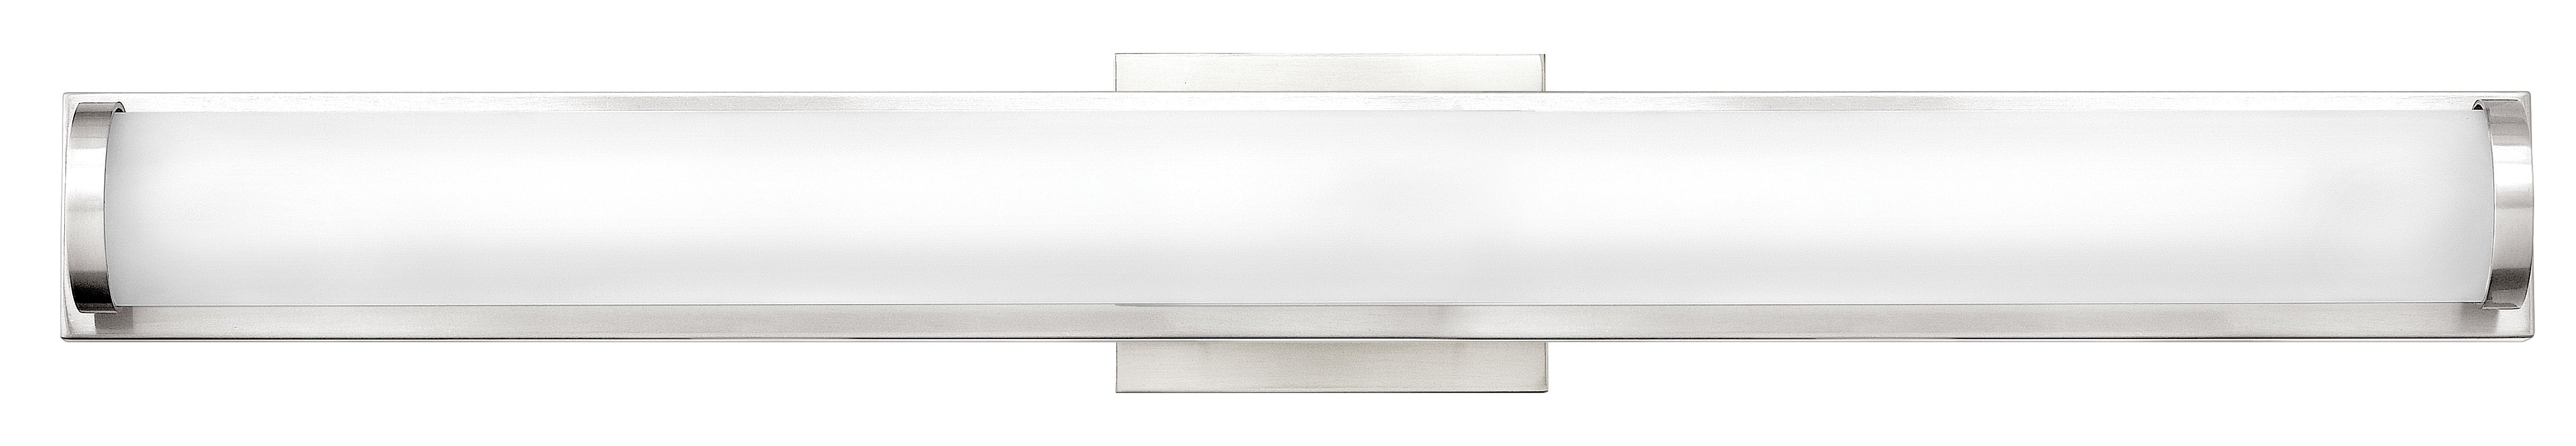 ACCLAIM Bathroom sconce Nickel INTEGRATED LED - 53844PN | HINKLEY